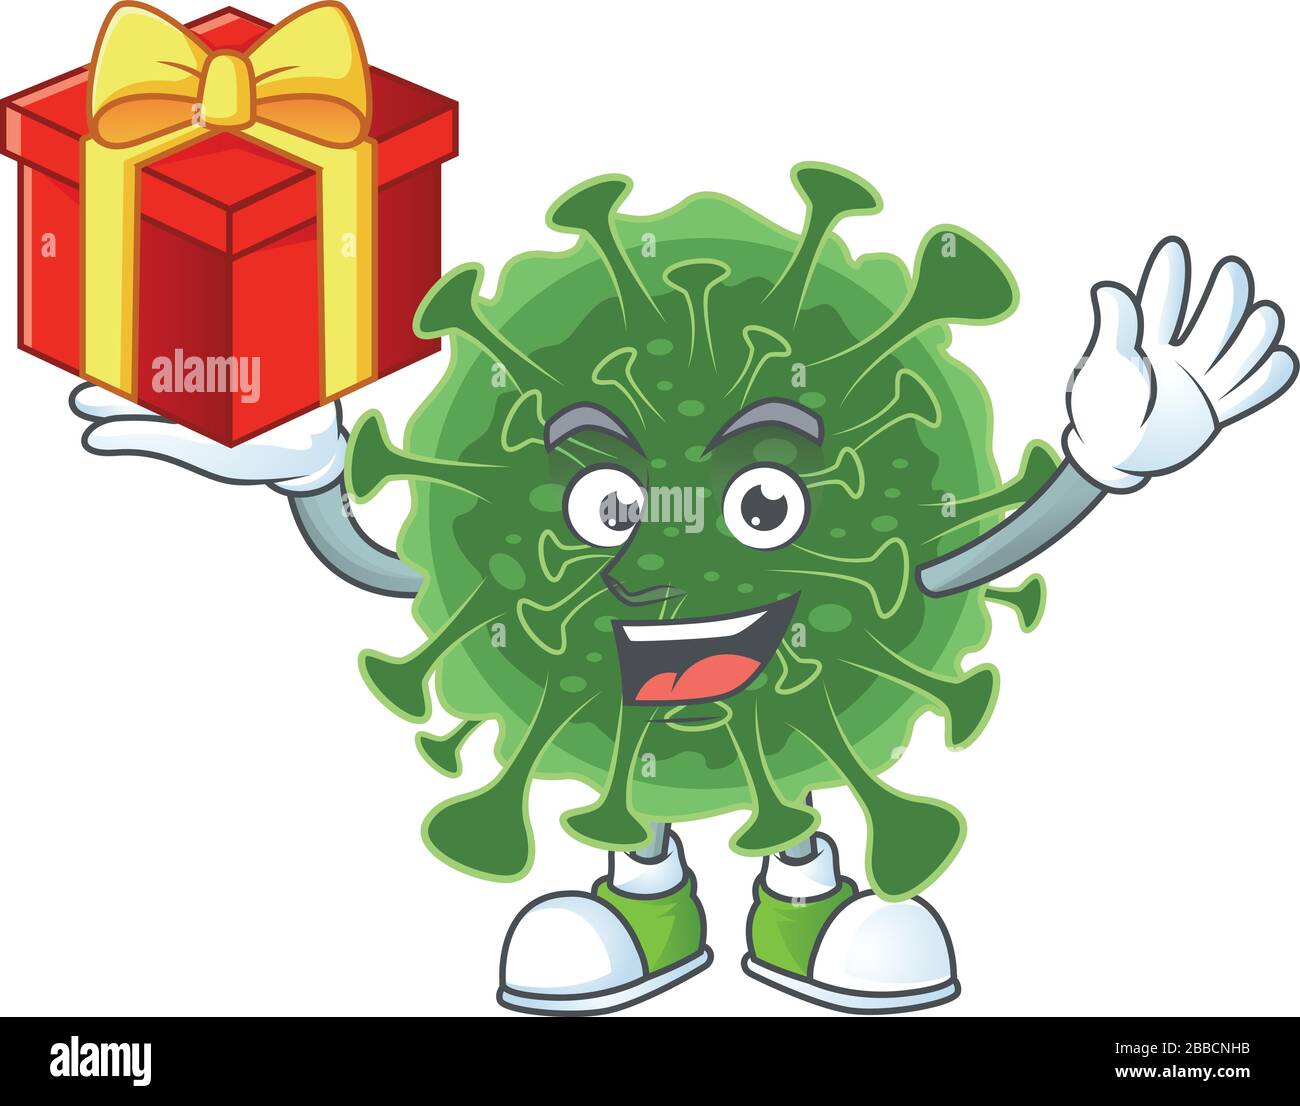 A mascot design style of wuhan coronavirus showing crazy face Stock Vector